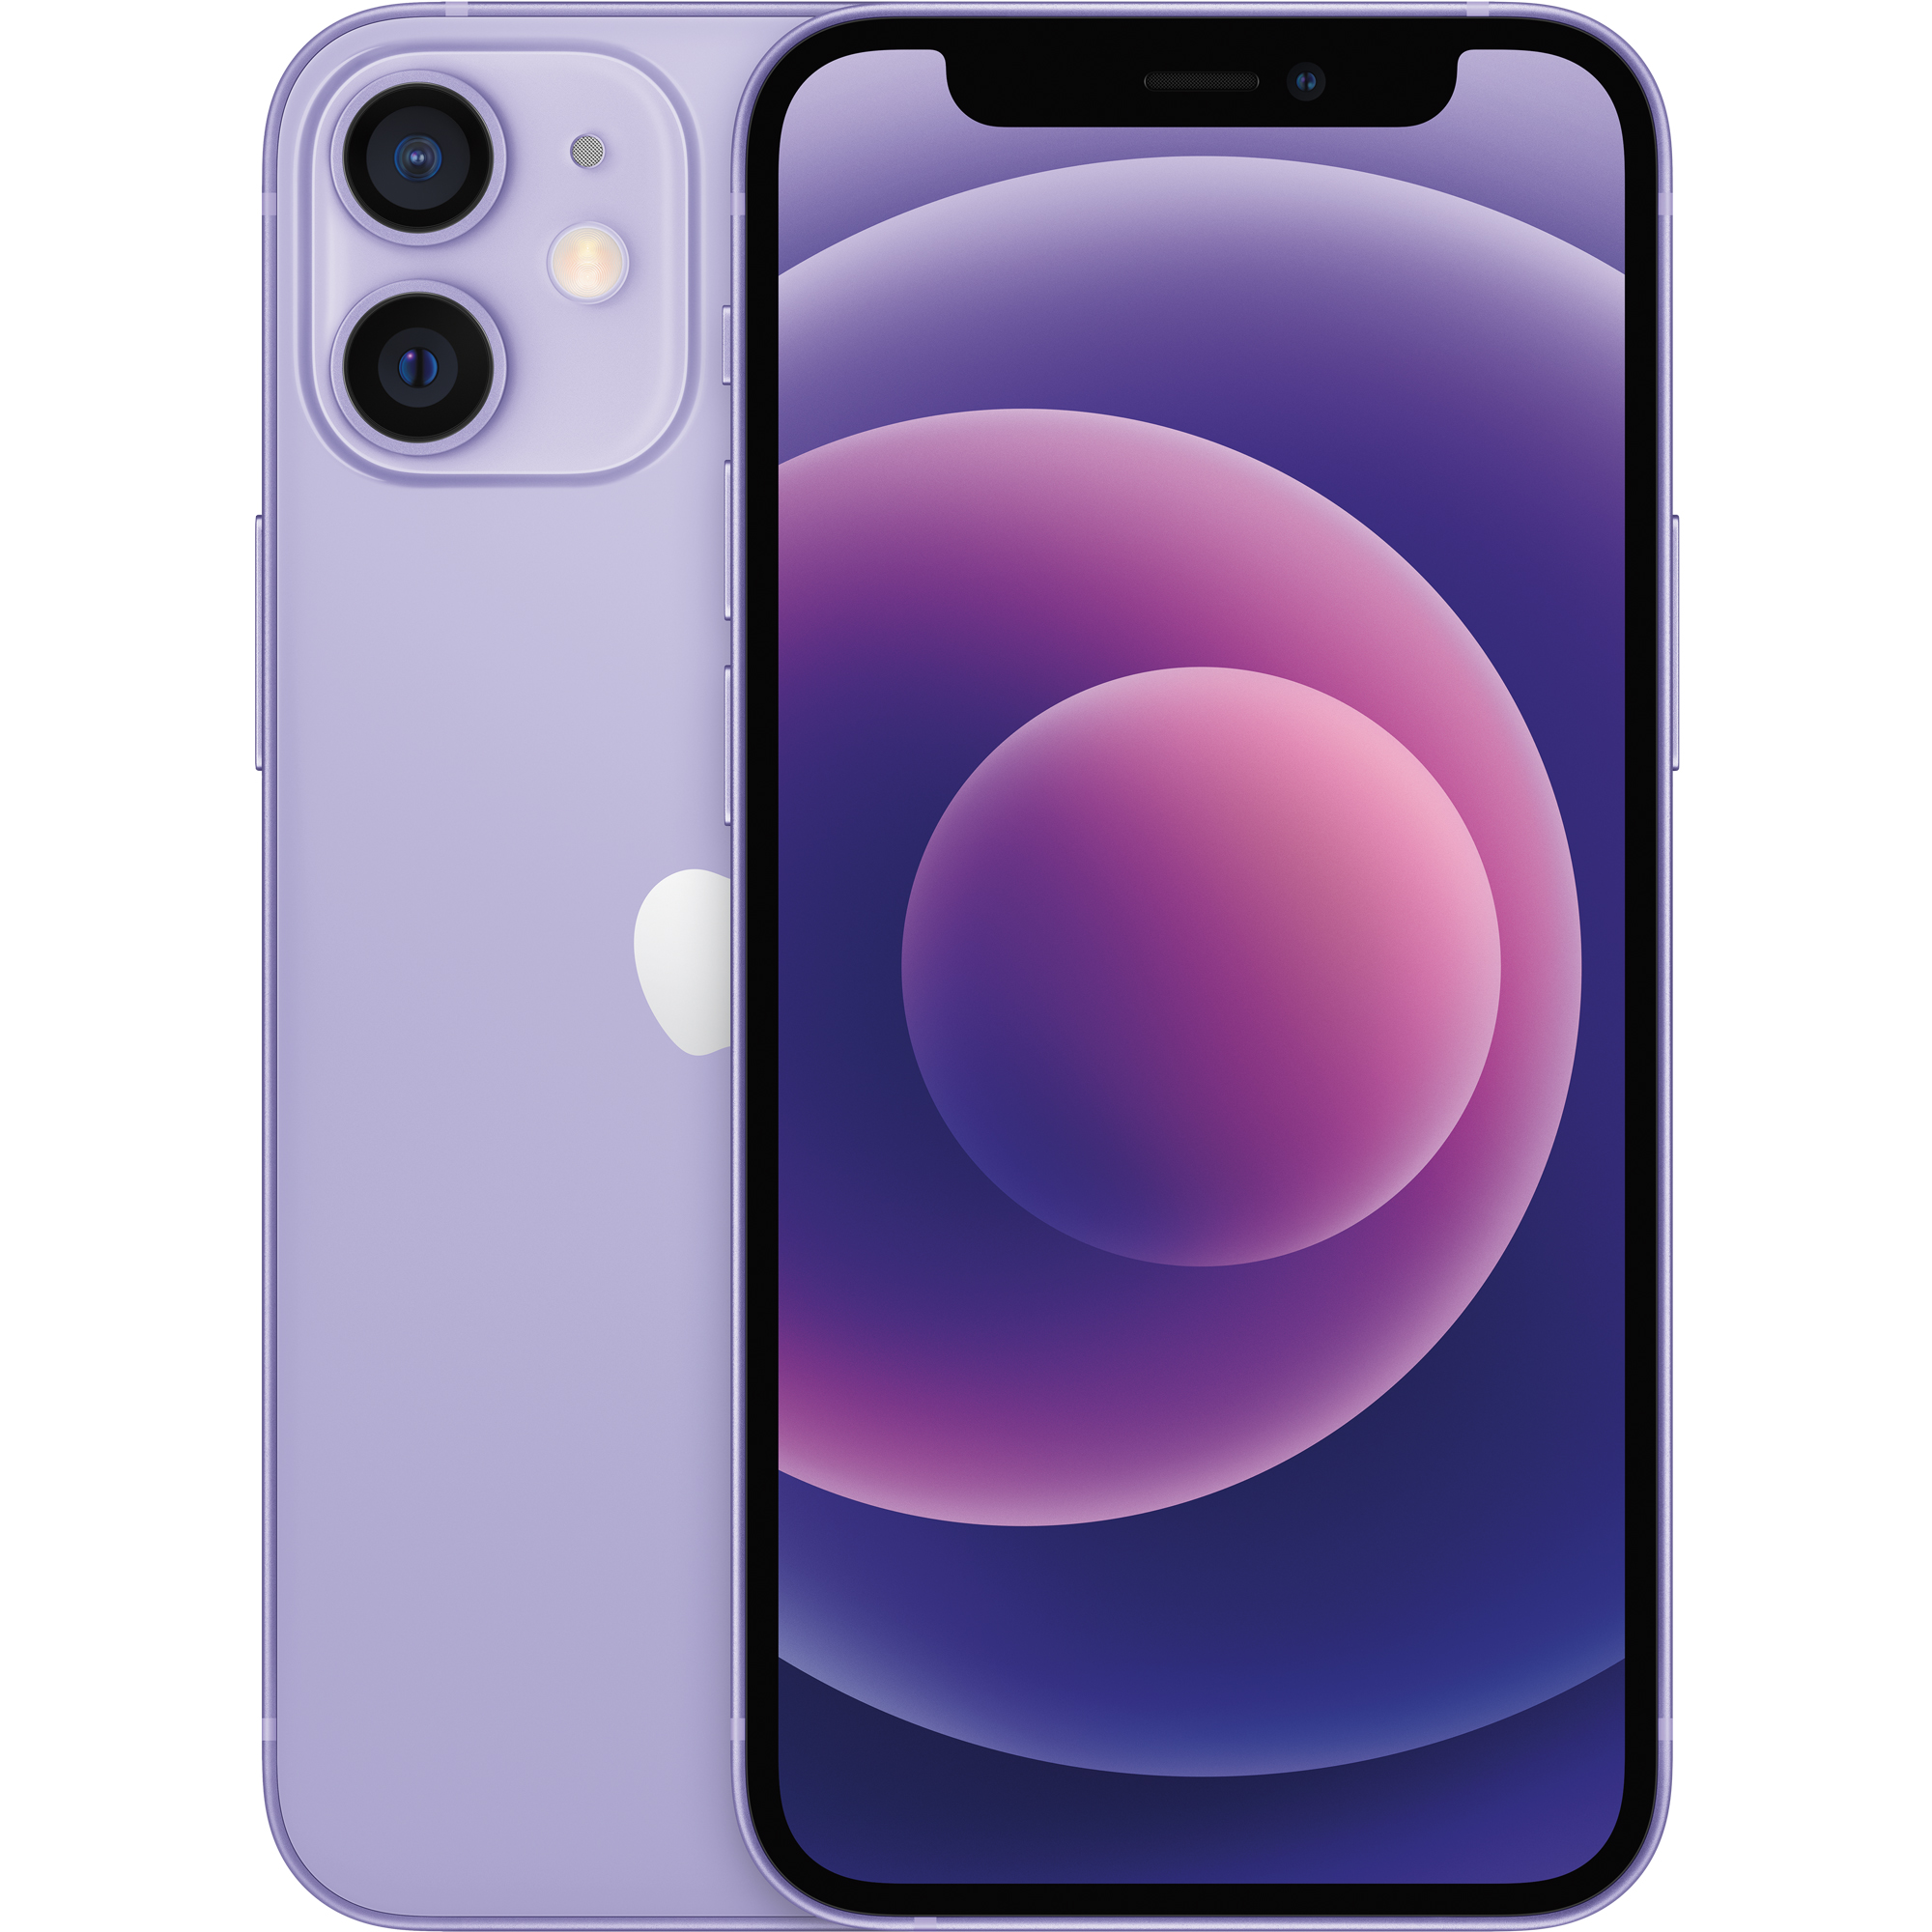 Total by Verizon Apple iPhone 12, 64GB, Purple- Prepaid Smartphone [Locked to Total by Verizon] - image 4 of 10